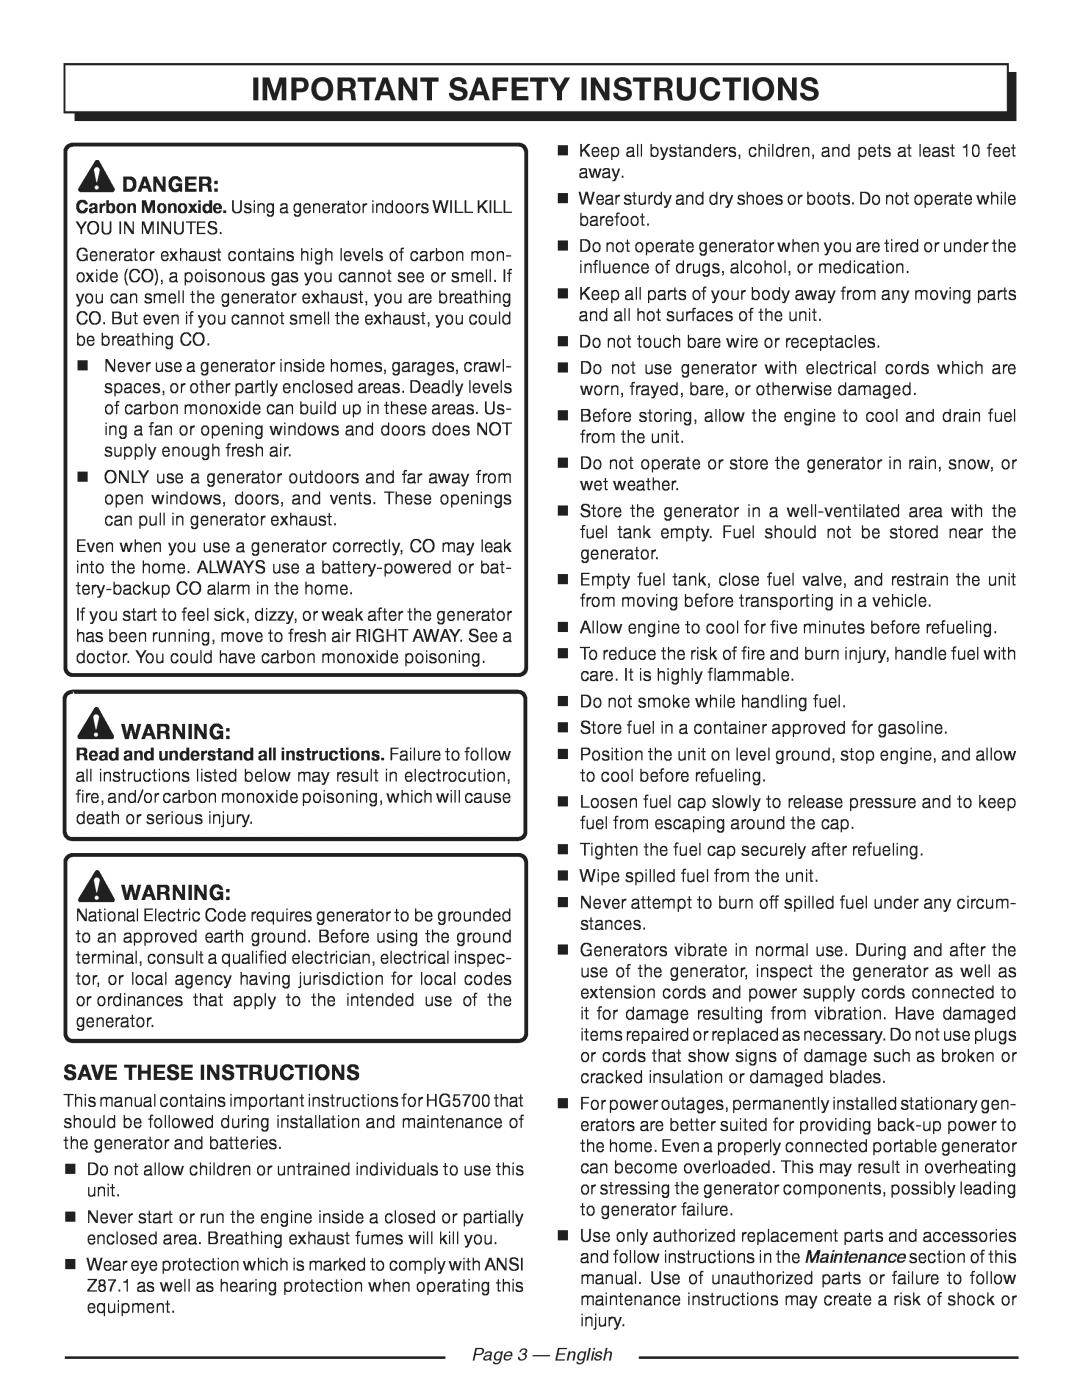 Homelite HG5700 manuel dutilisation important safety instructions, Danger, Save These Instructions, Page  - English 